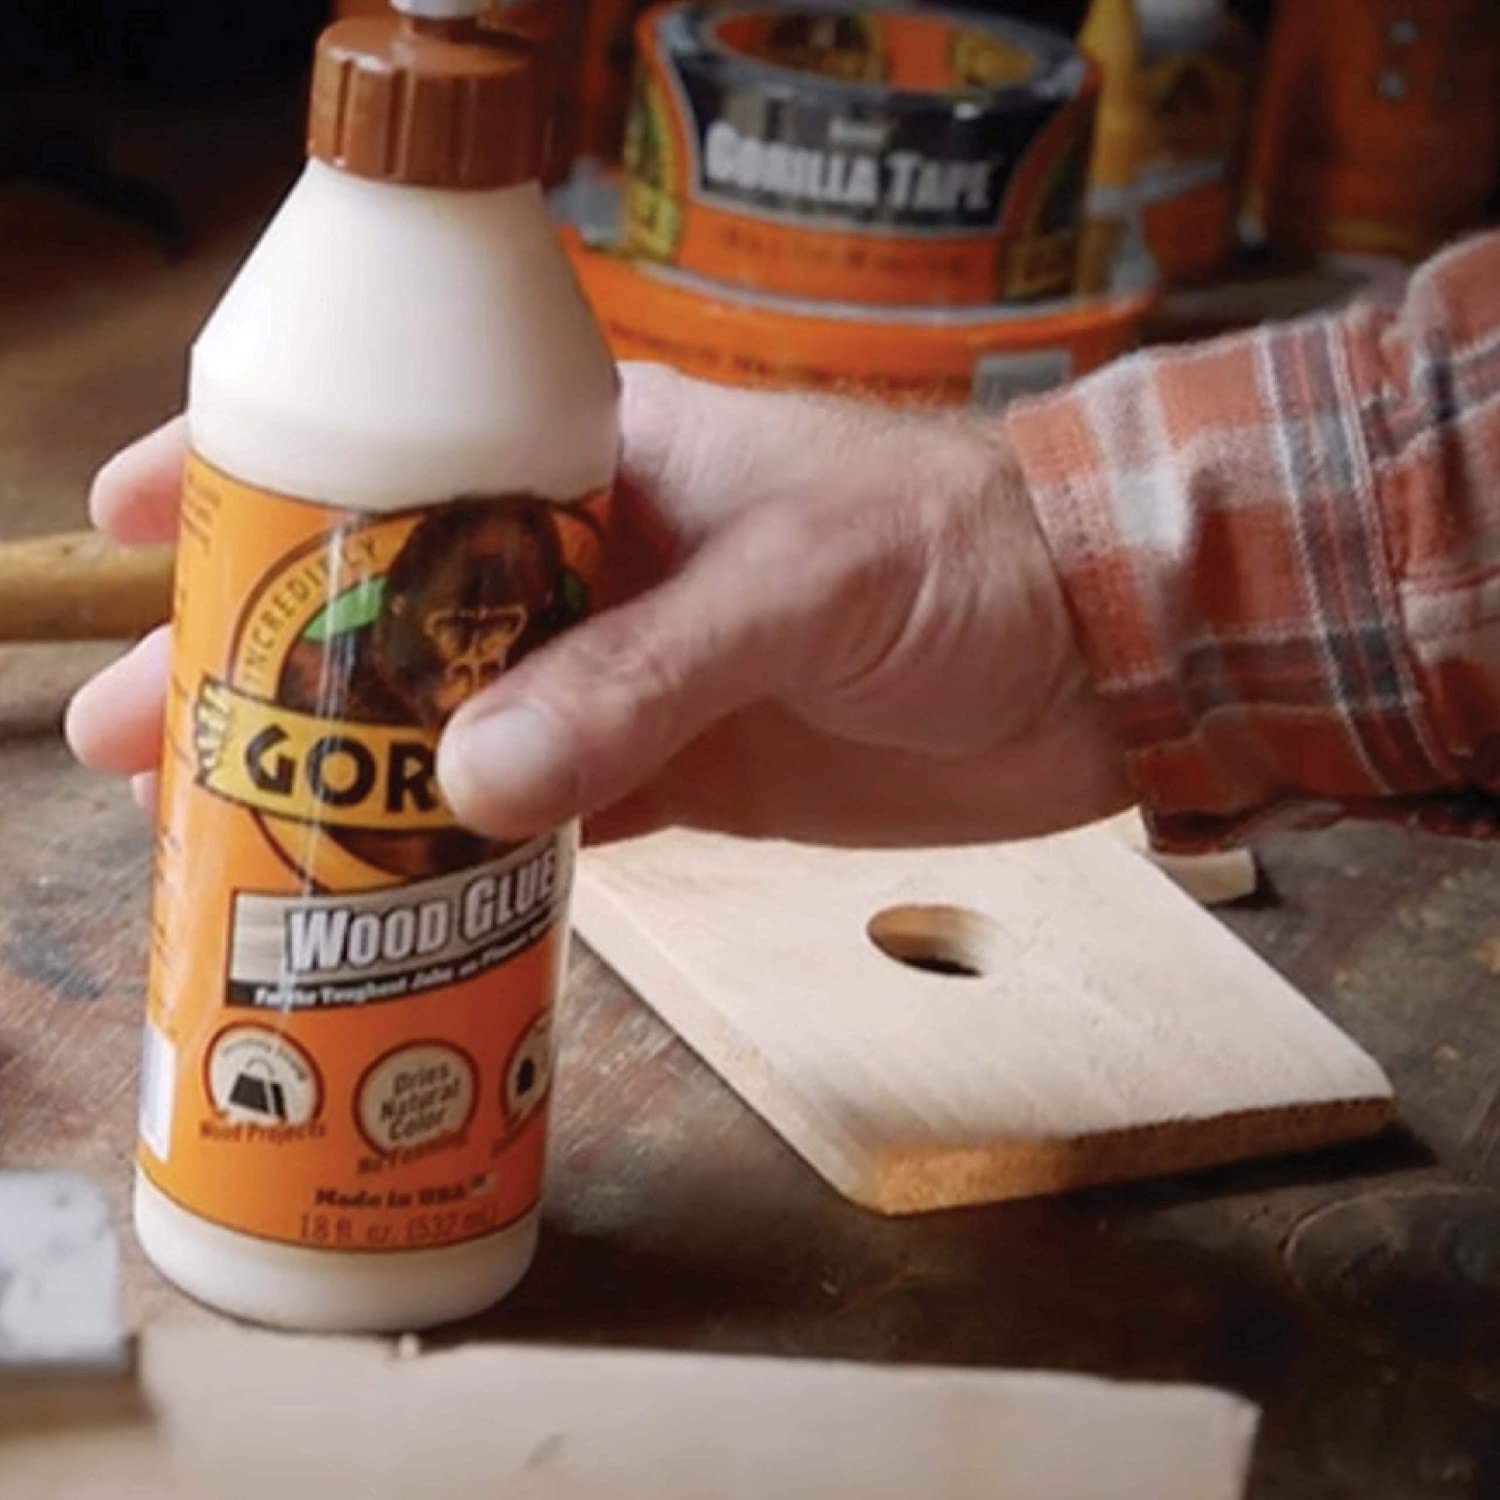 How to Get Gorilla Glue off Your Hands